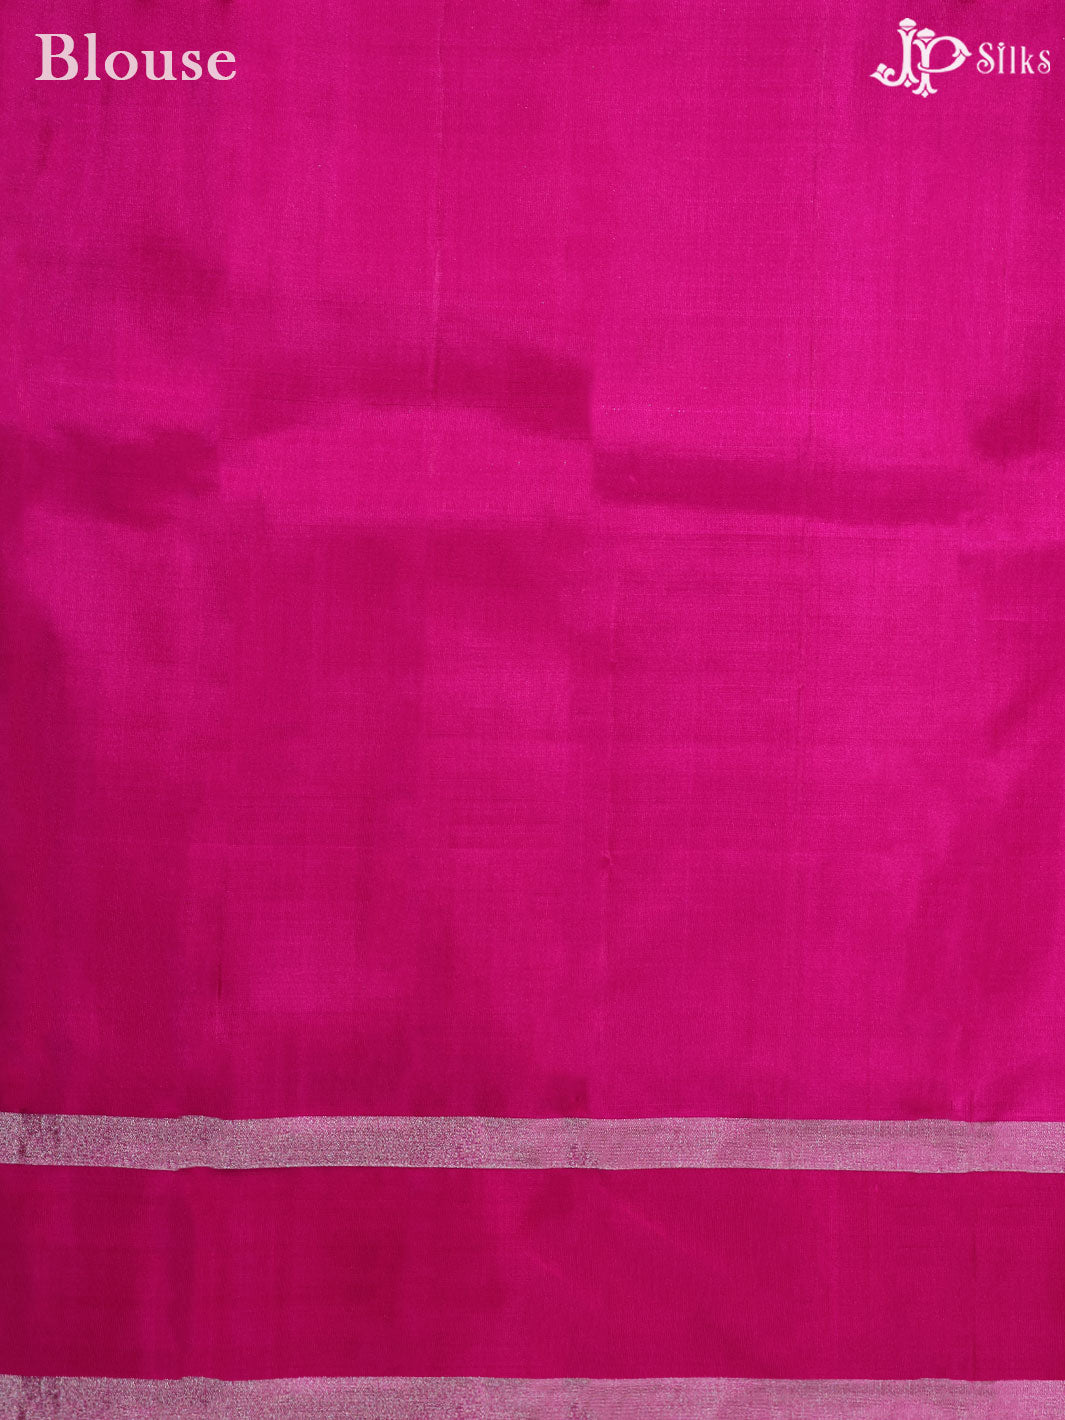 Dual Tone Purple and Pink Kanchipuram Silk Saree - A2547 - View 2